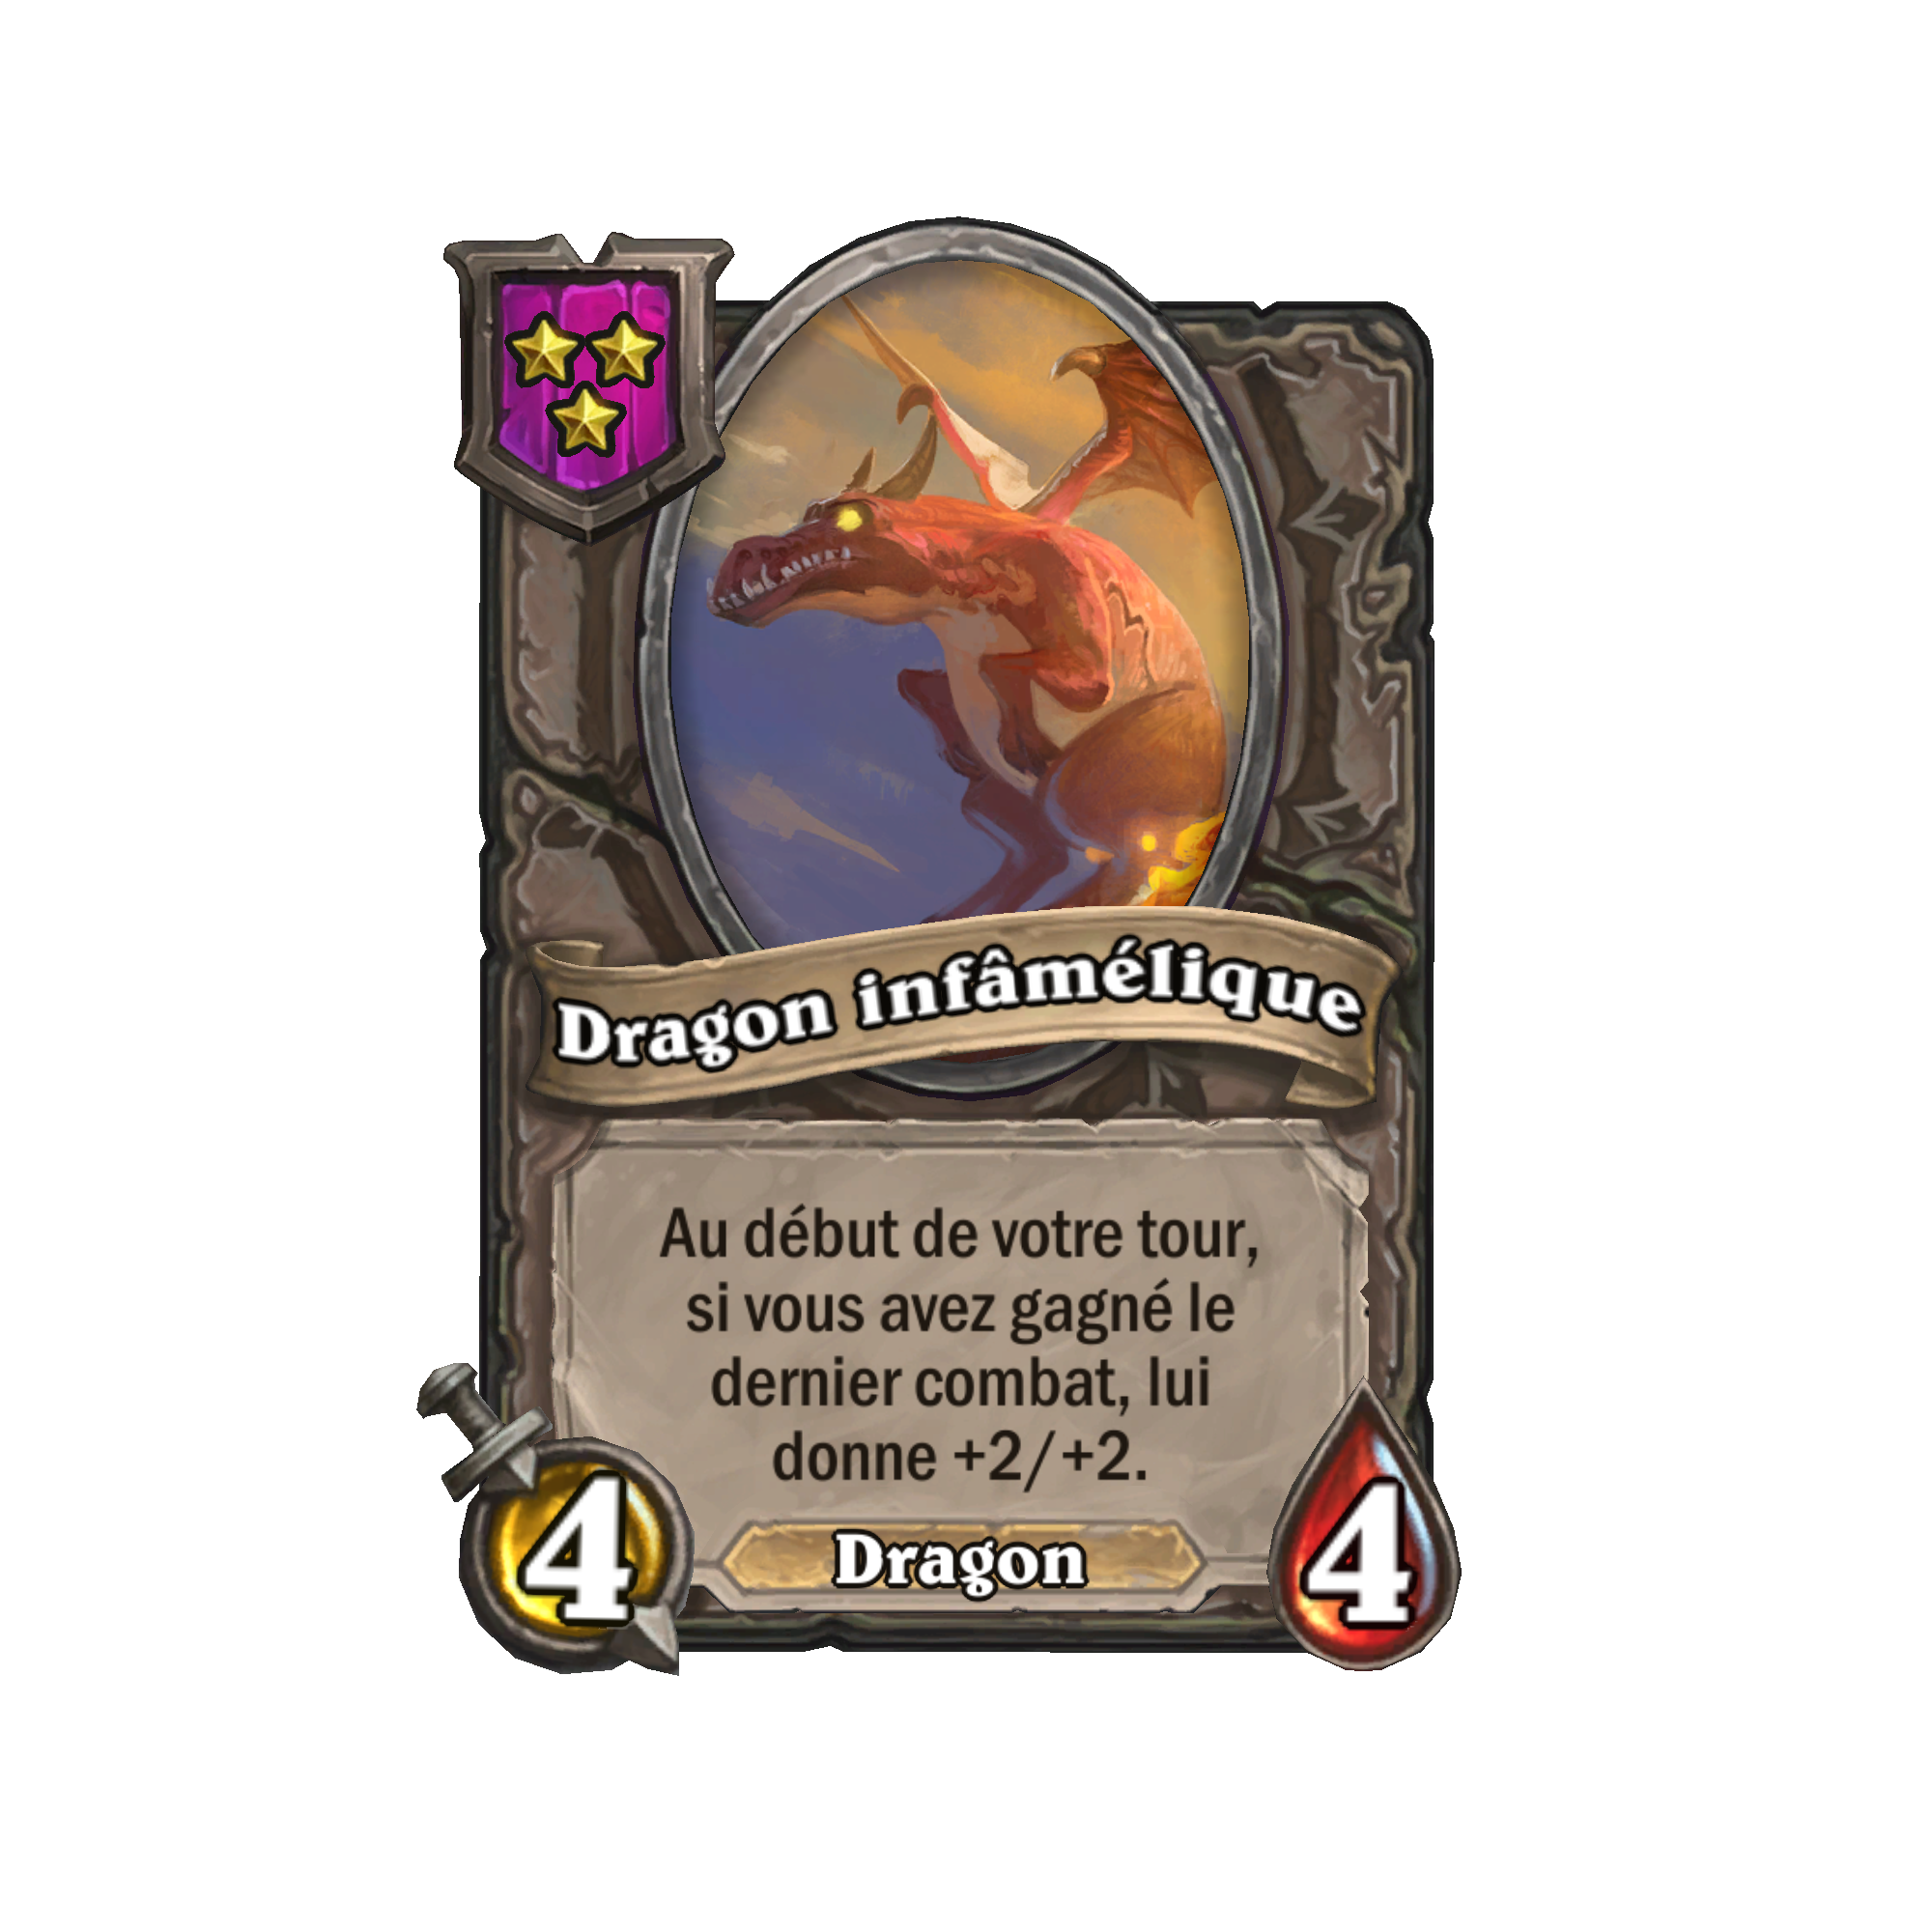 Dragon infâmélique